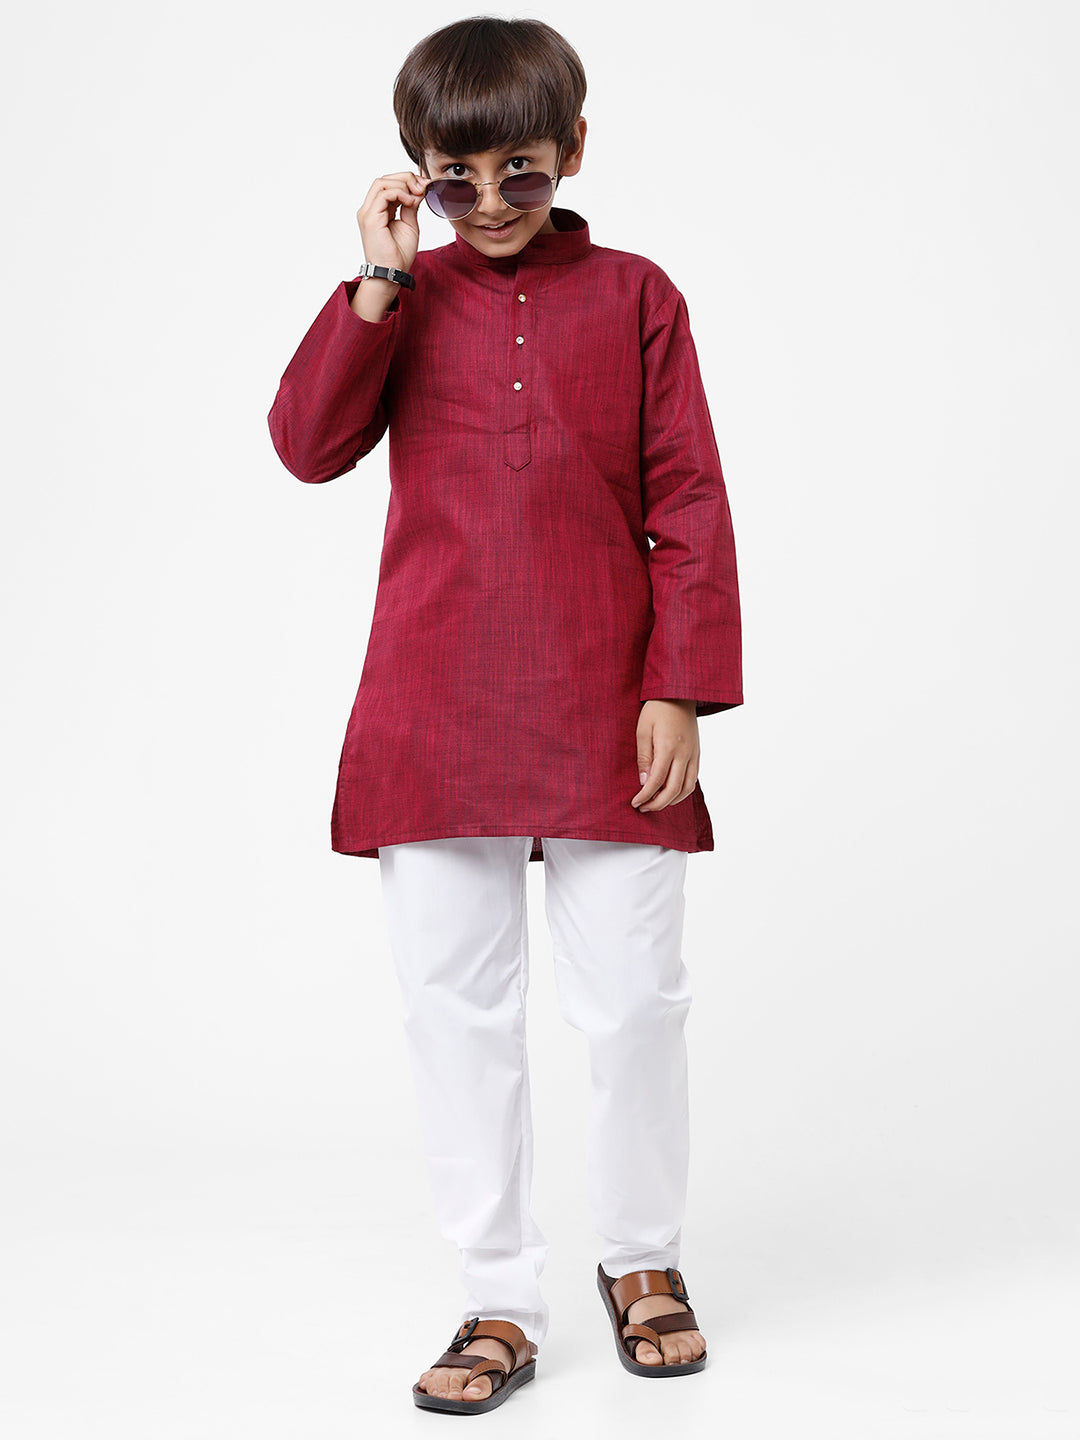 Roal blue kurta with white trouser for Men's | Mens kurta designs, Gents  kurta design, Fashion suits for men